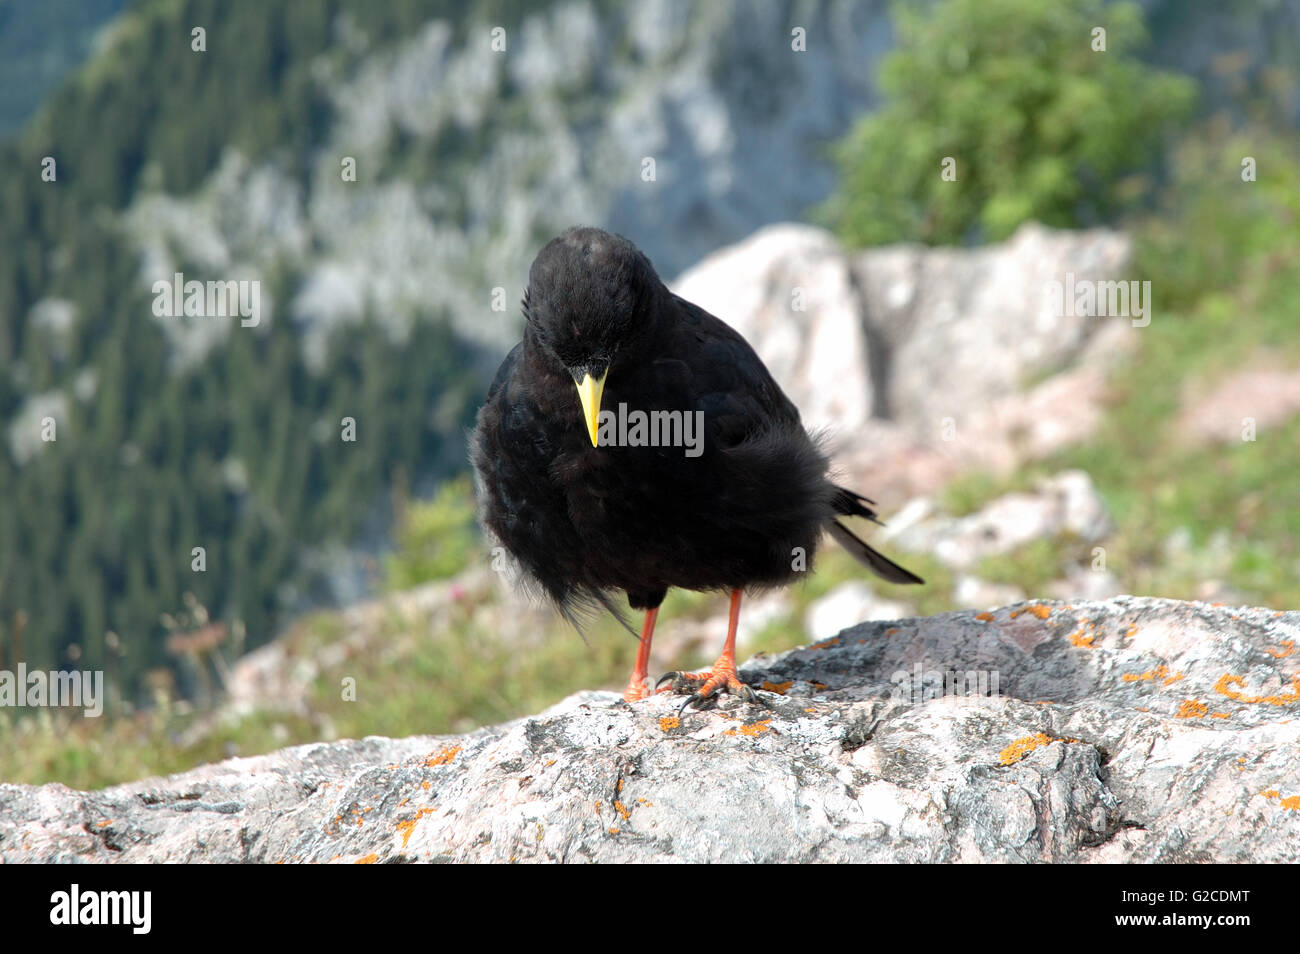 Black Alpine bird with yellow beak standing on rock Stock Photo